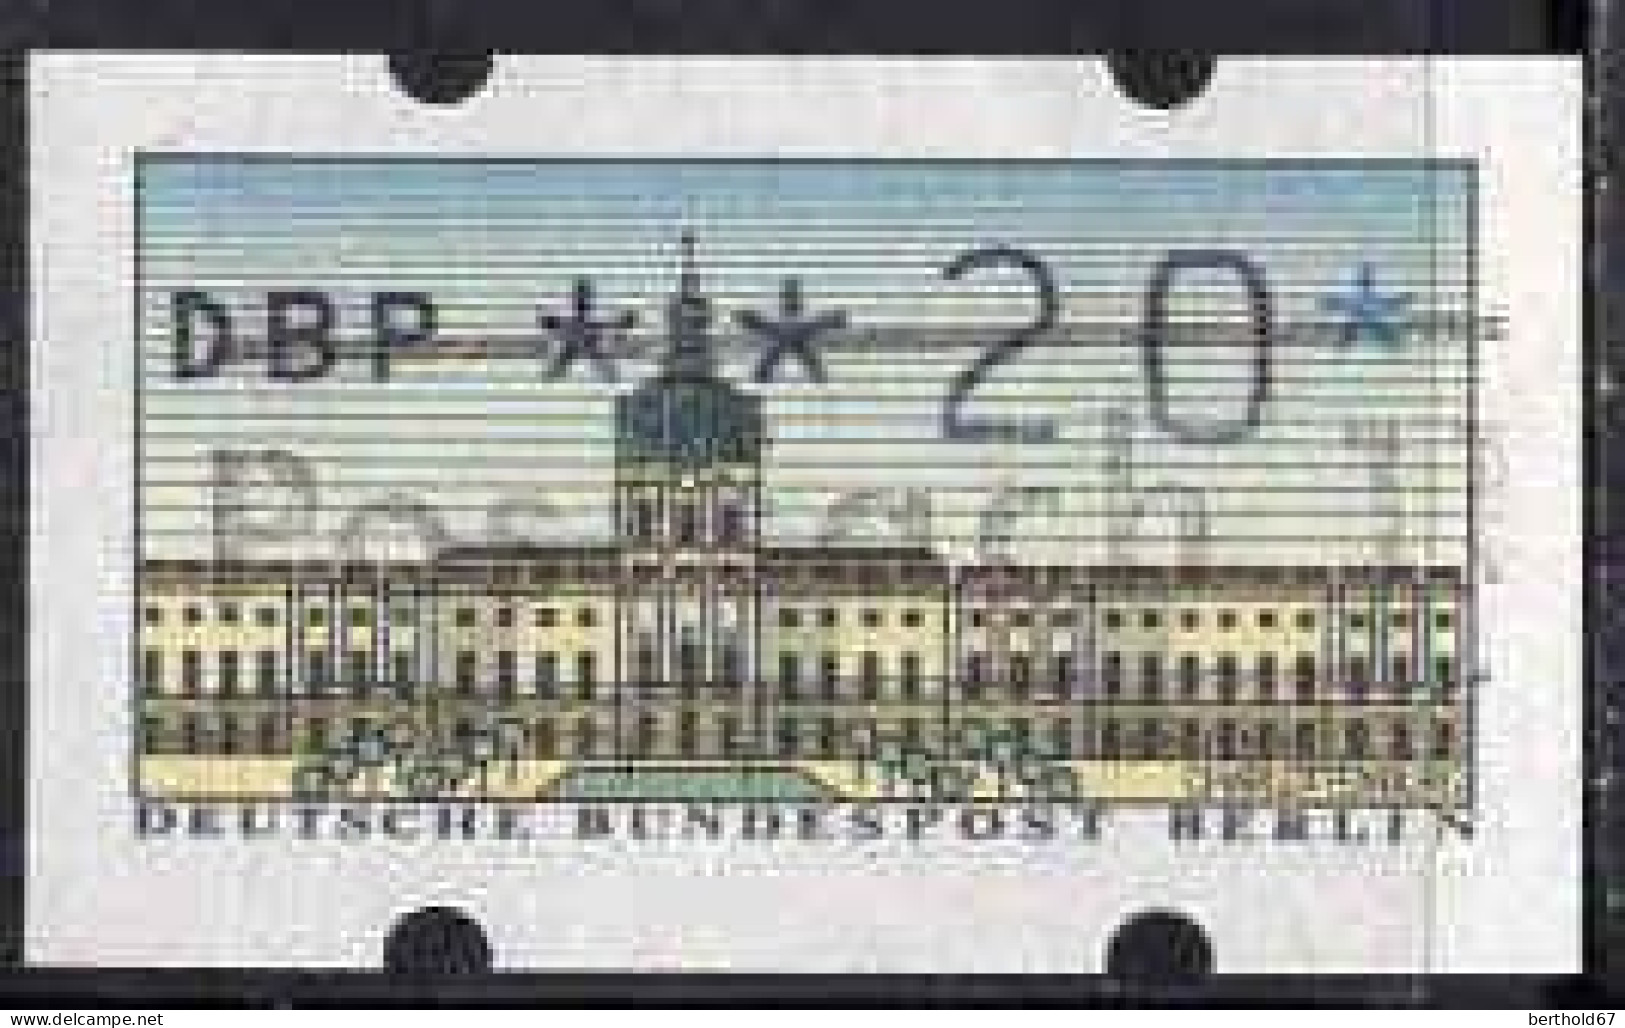 Berlin Distrib Obl Yv: 7 Château De Charlottenburg (Belle Obl.mécanique) - Used Stamps